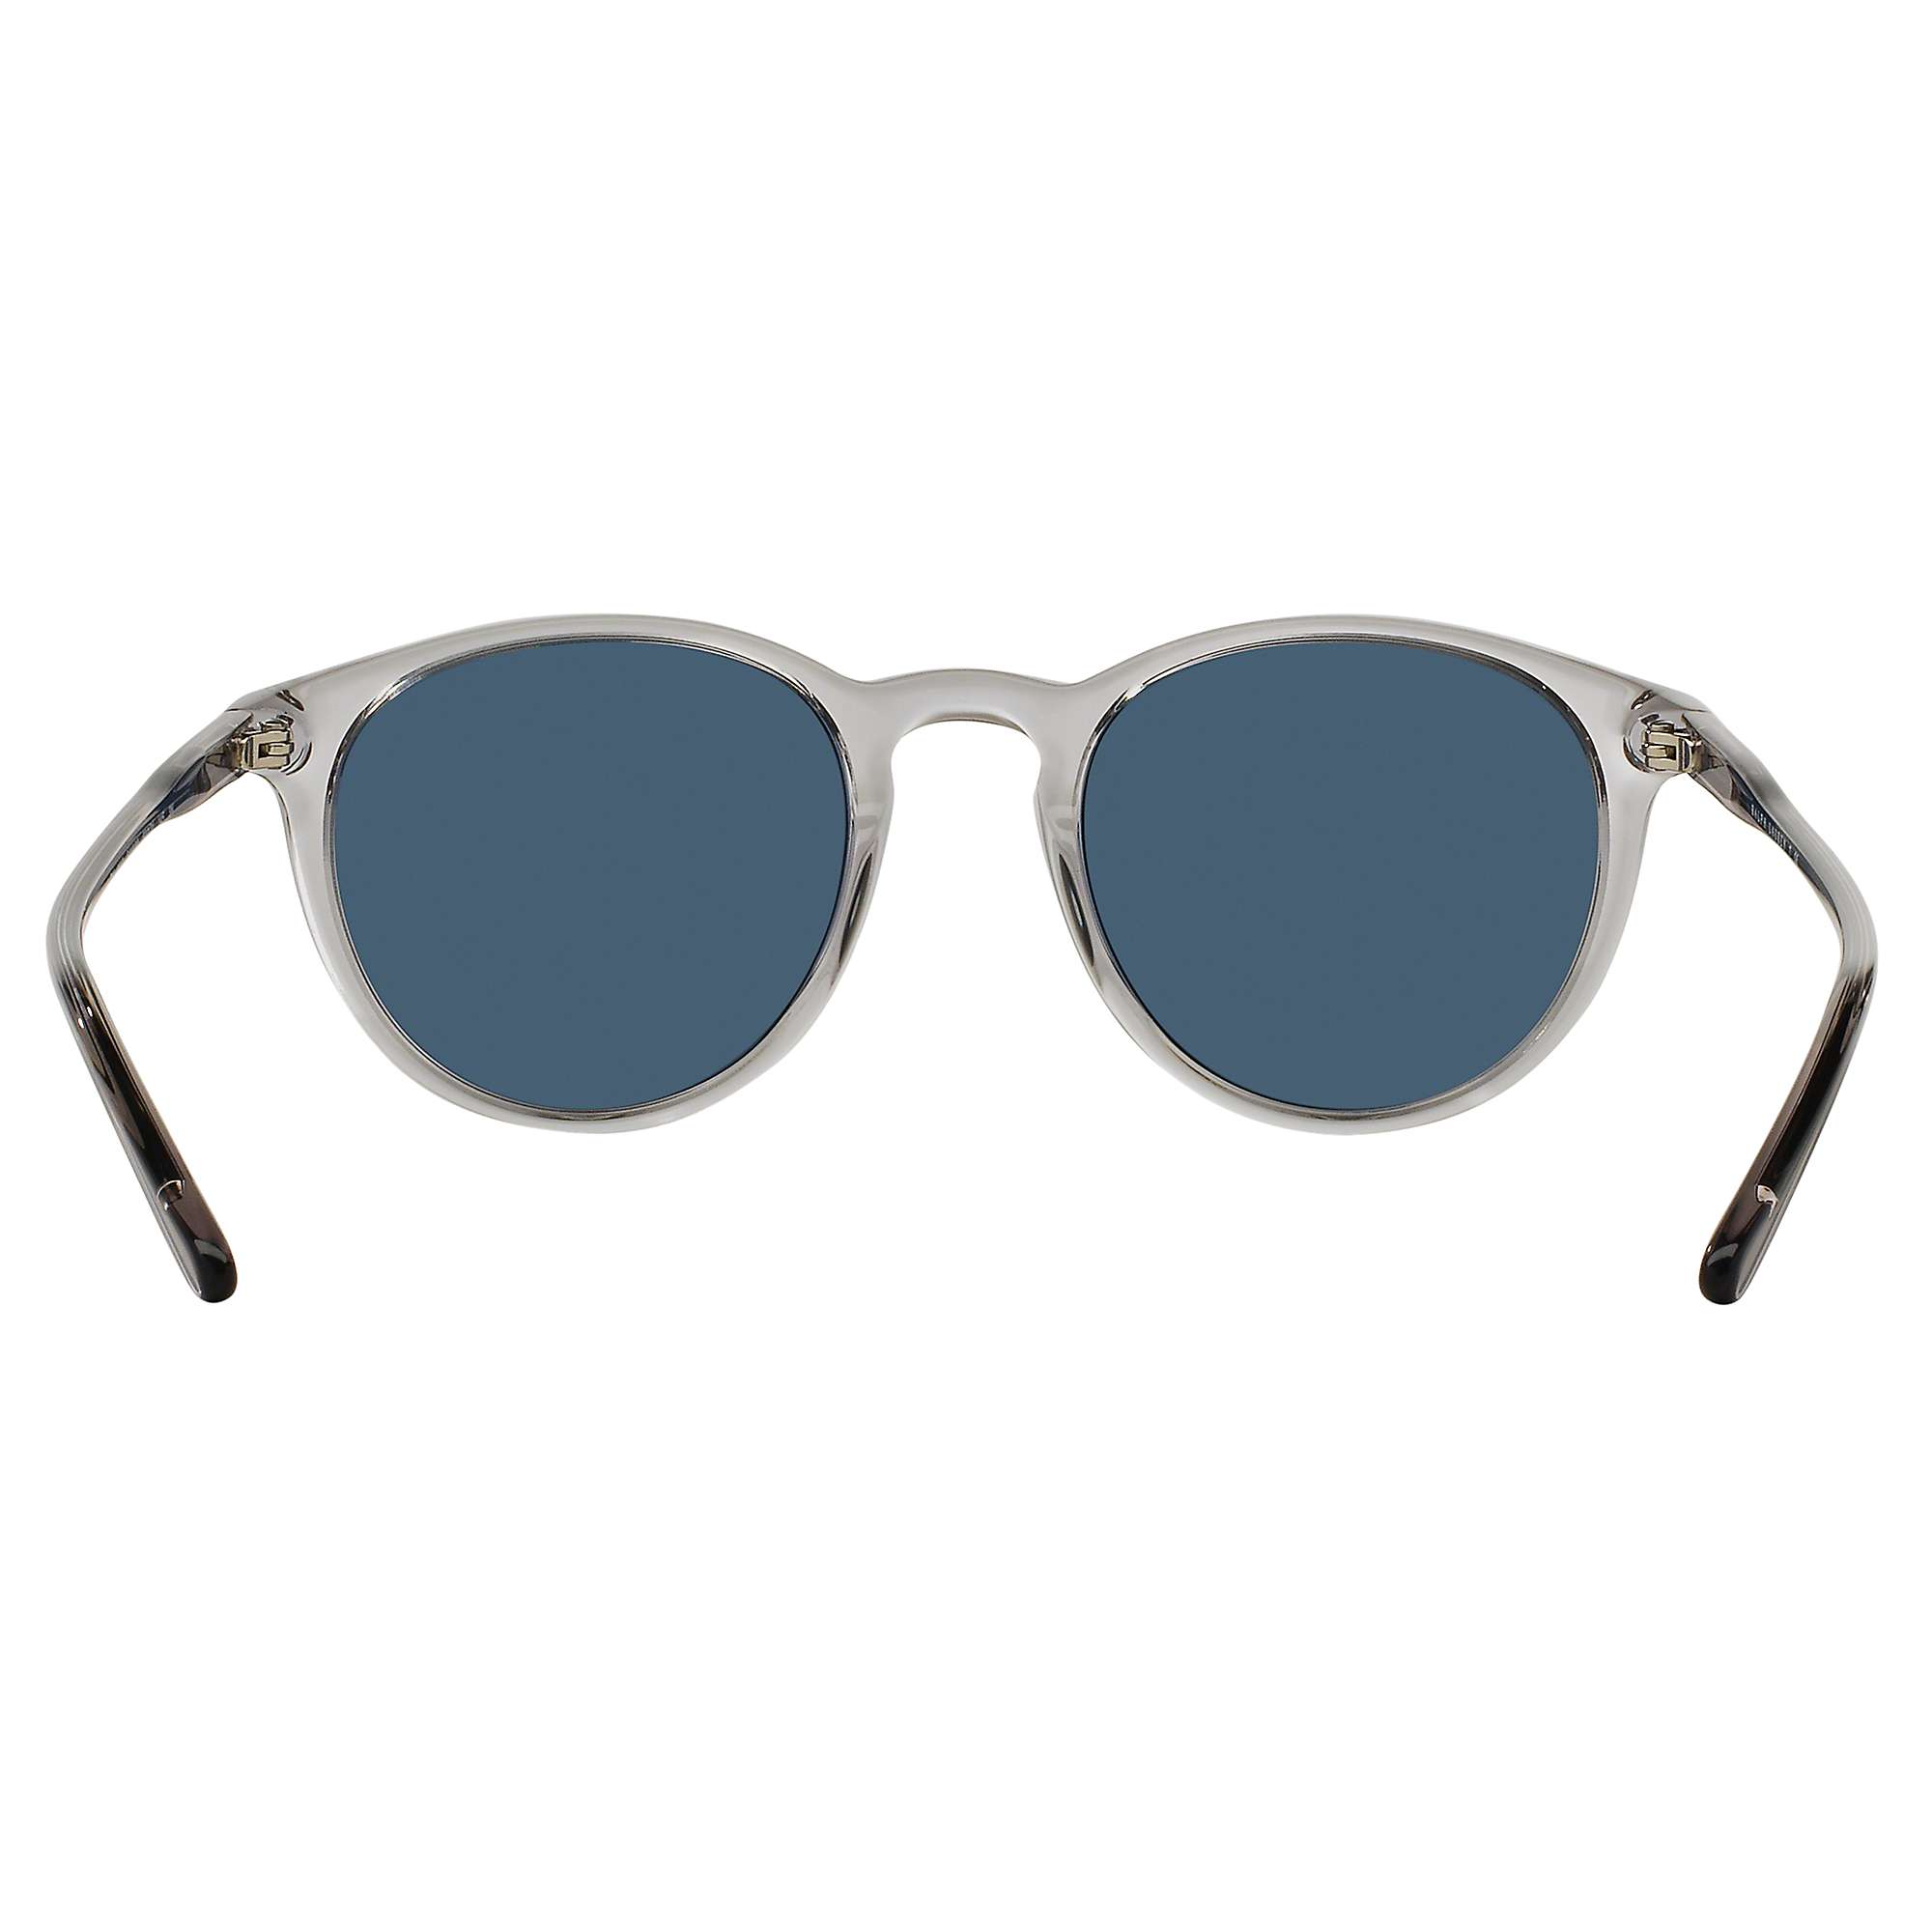 Buy Polo Ralph Lauren PH4110 Men's Oval Sunglasses Online at johnlewis.com